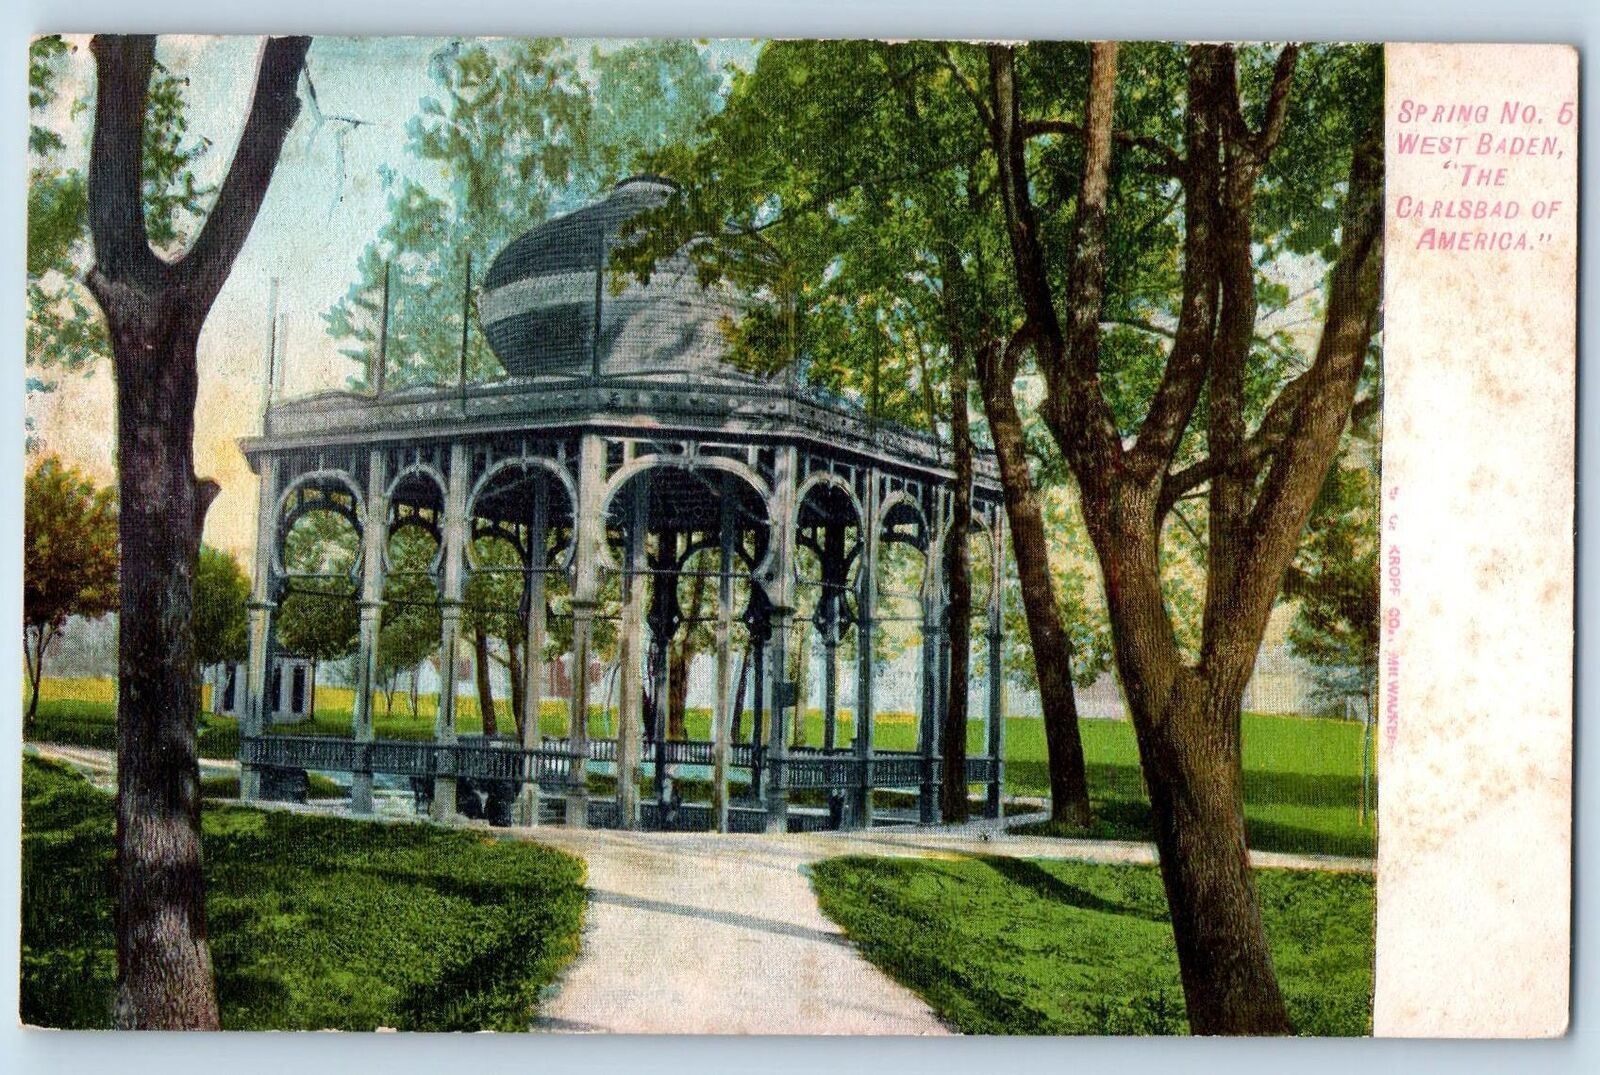 c1920's Spring No. 6 West Baden The Carlsbad Of America Indiana Vintage Postcard